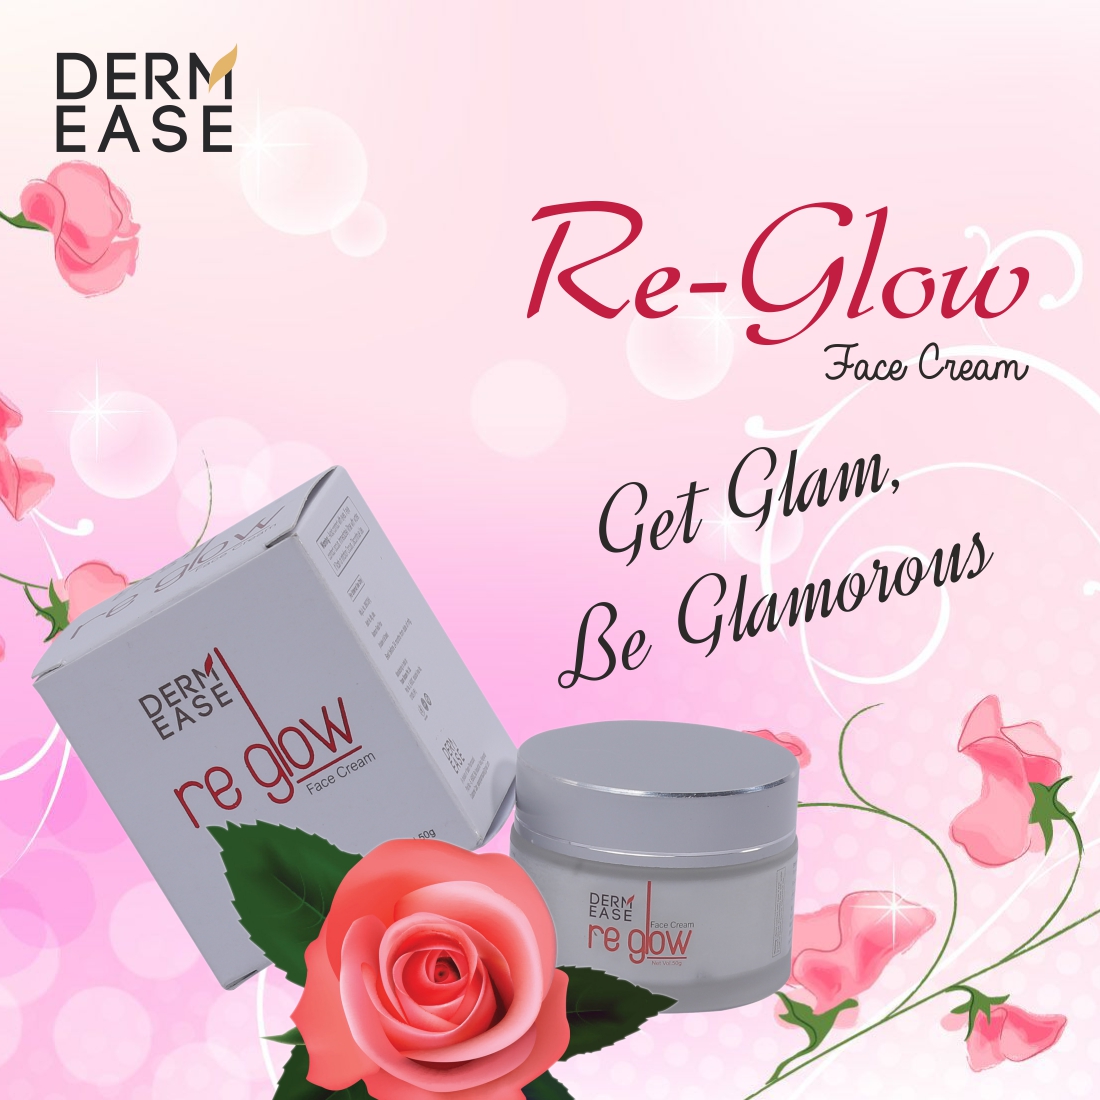 DERM EASE Re Glow Face Cream Combo